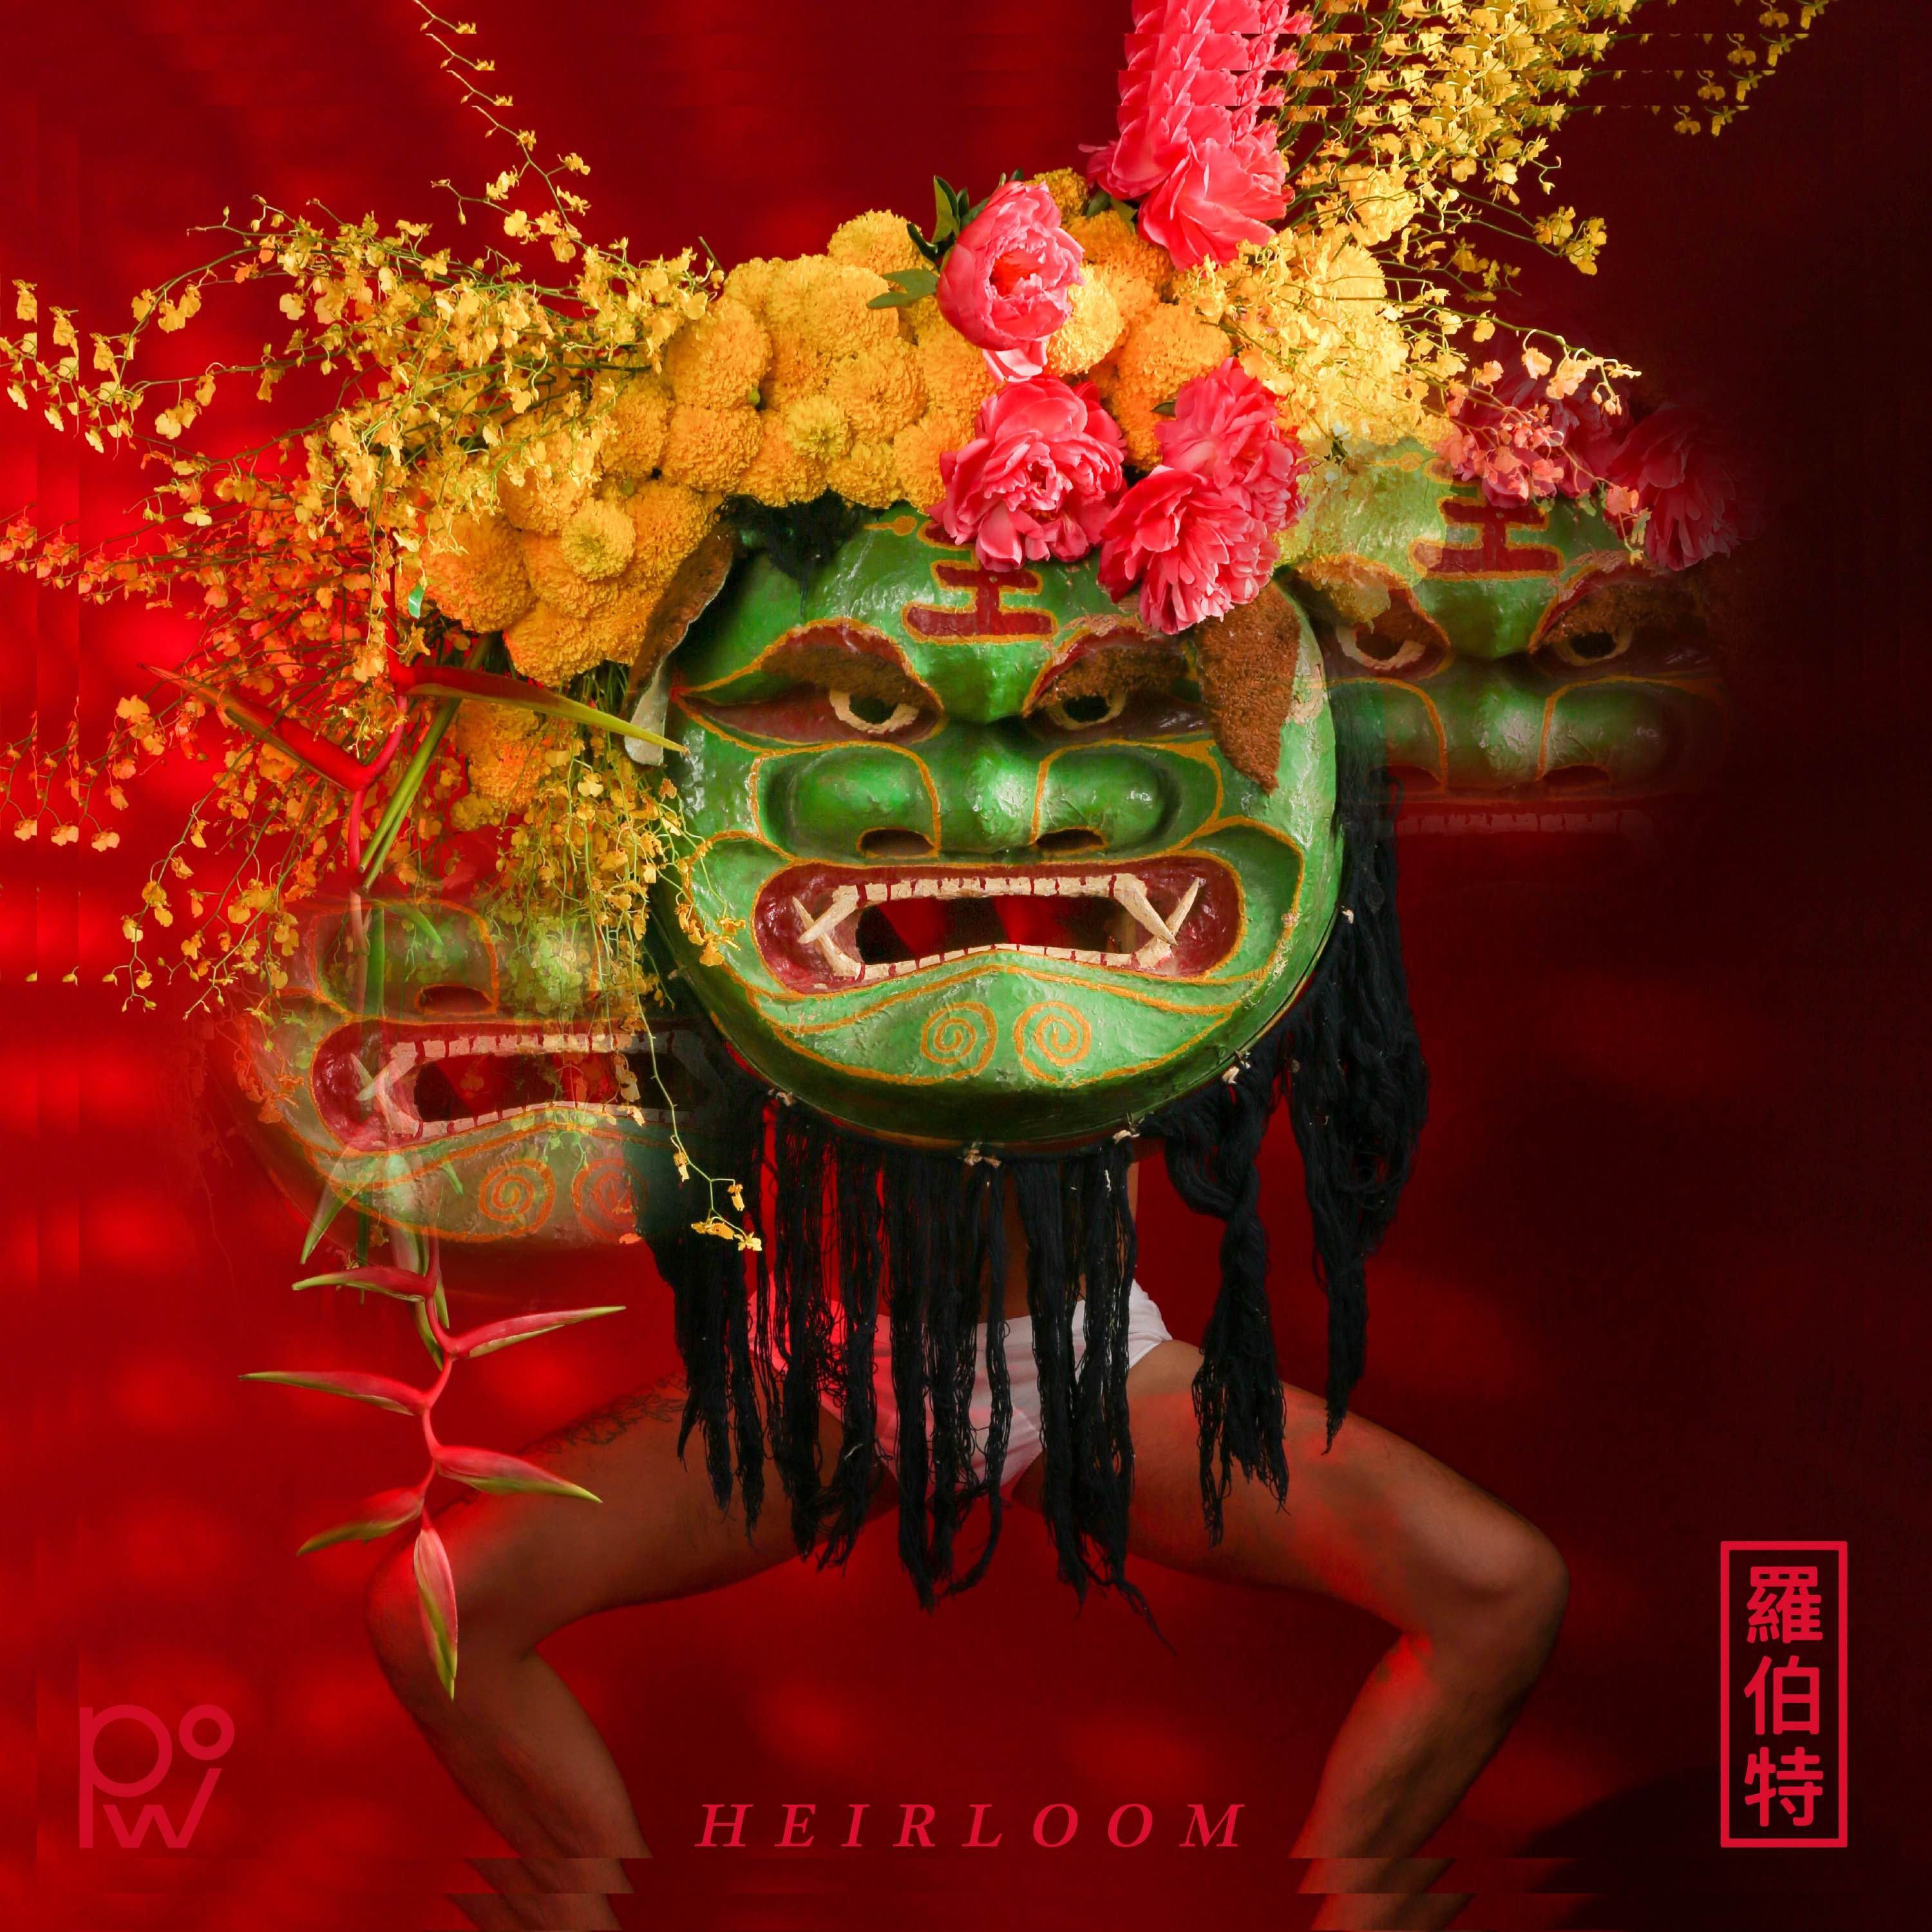 New album by Robert Yang - Heirloom